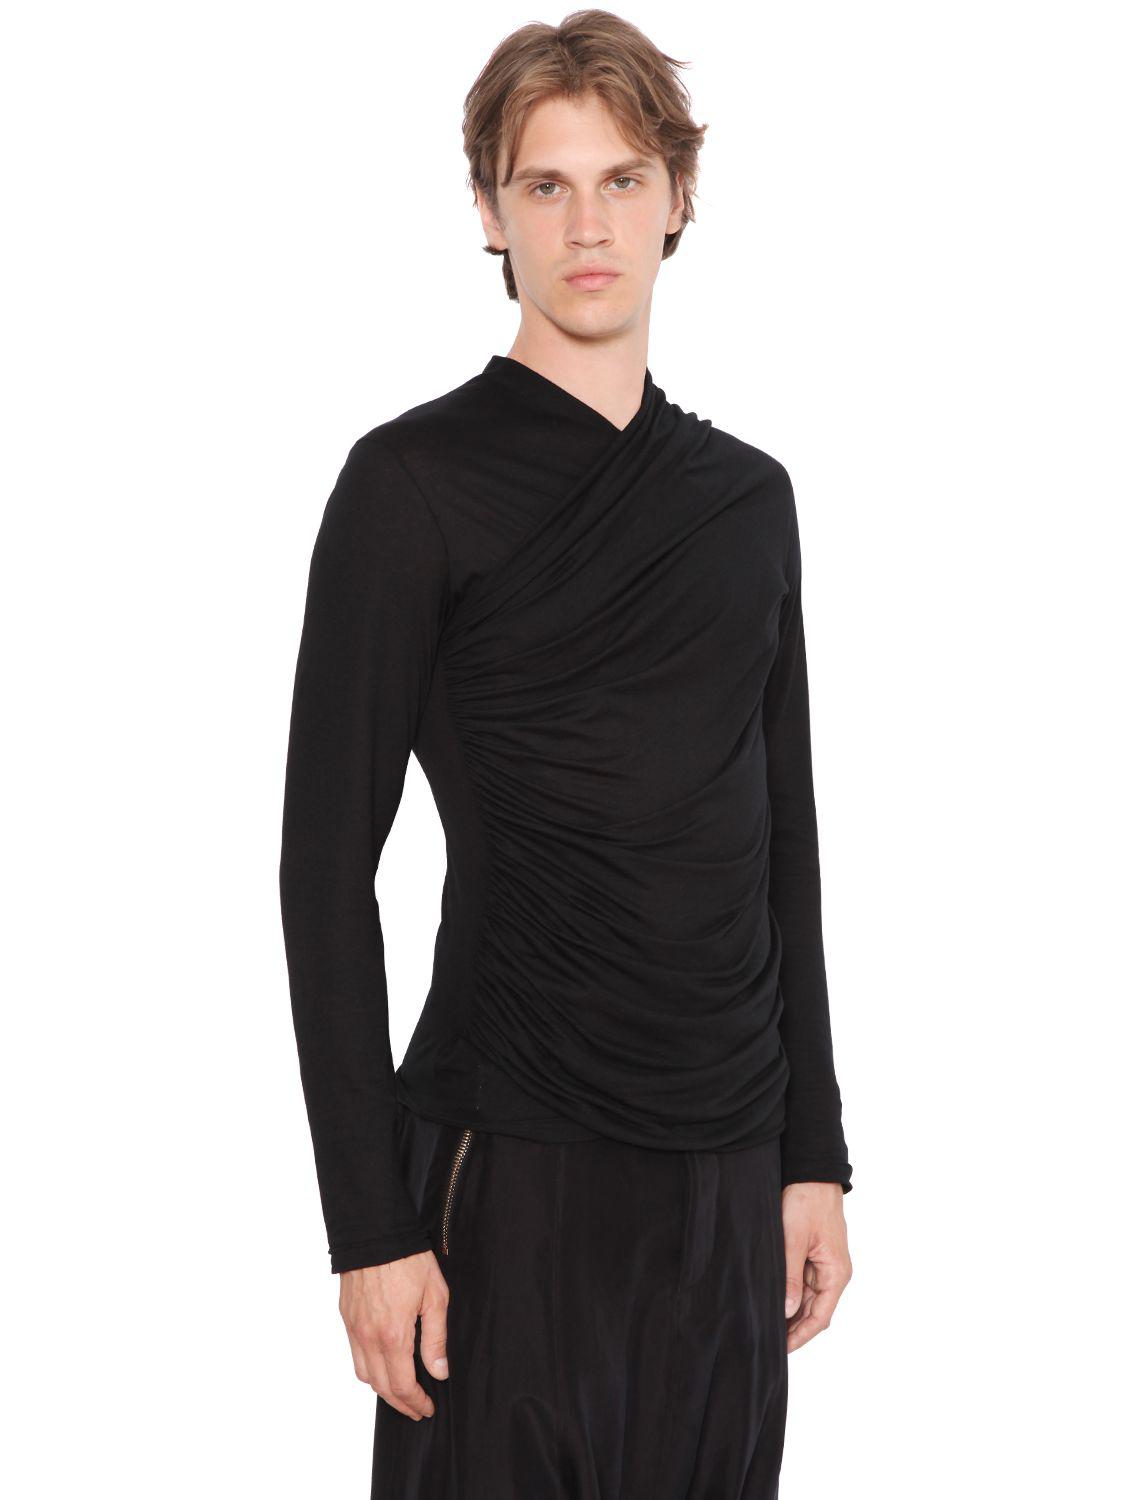 Balmain Cotton Drape Long Sleeve T-shirt in Black for Men - Lyst